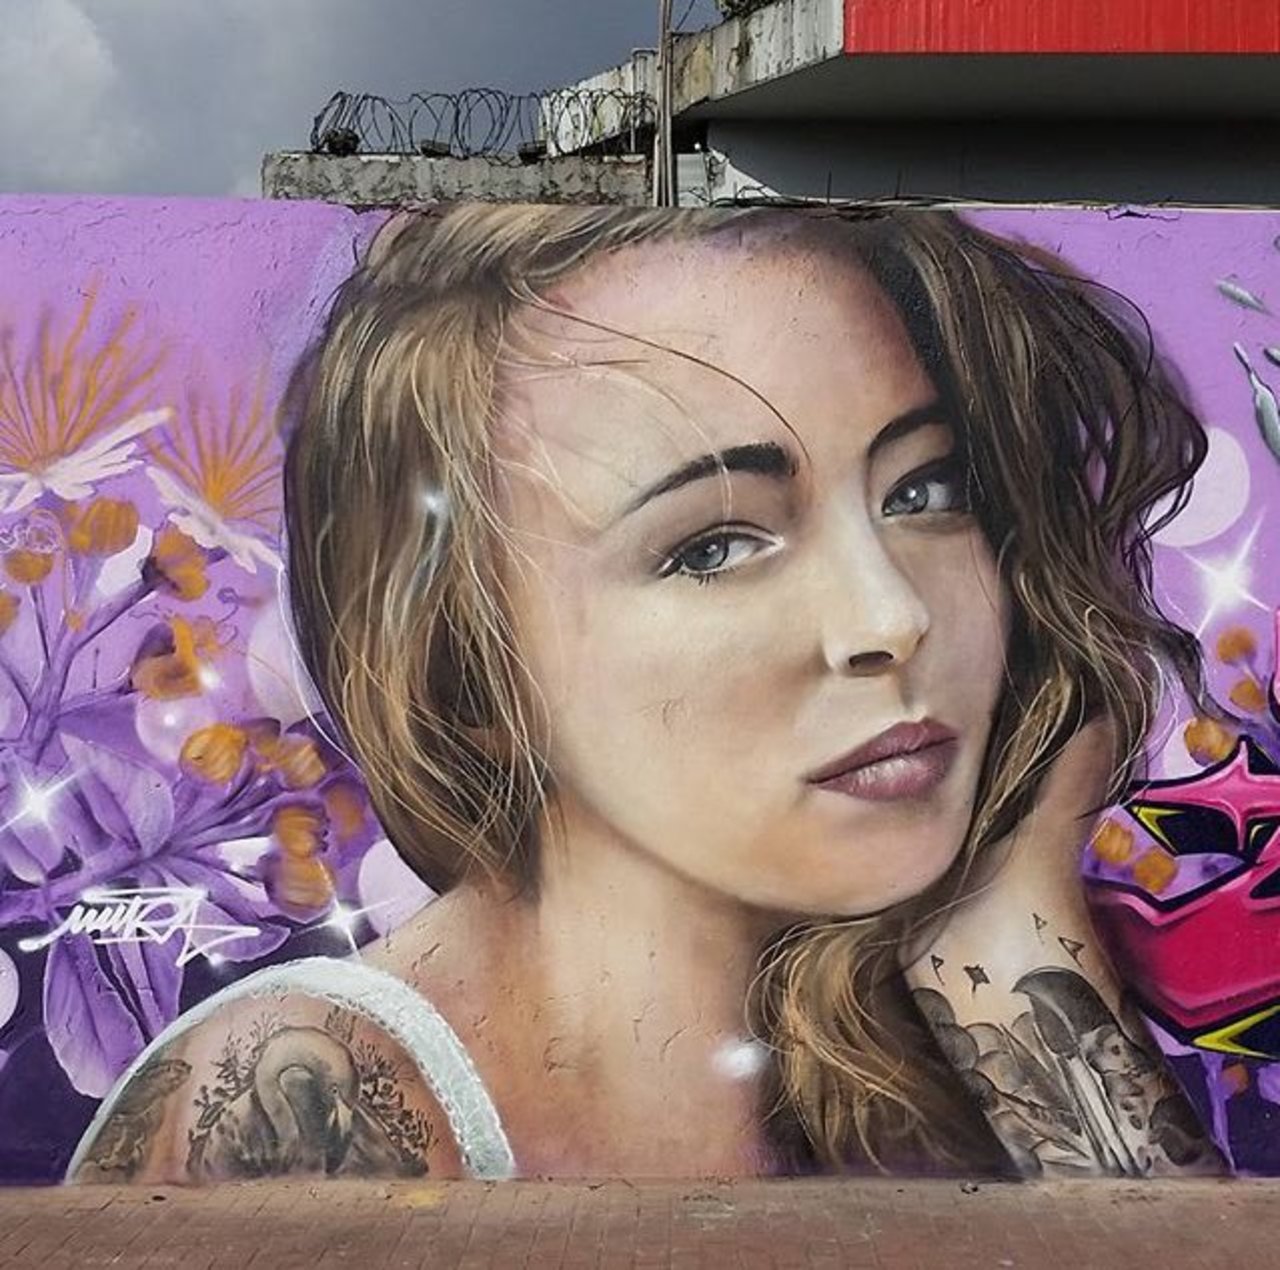 New Street Art by Mantarea 

#art #graffiti #mural #streetart https://t.co/7rqlJ6MZnn